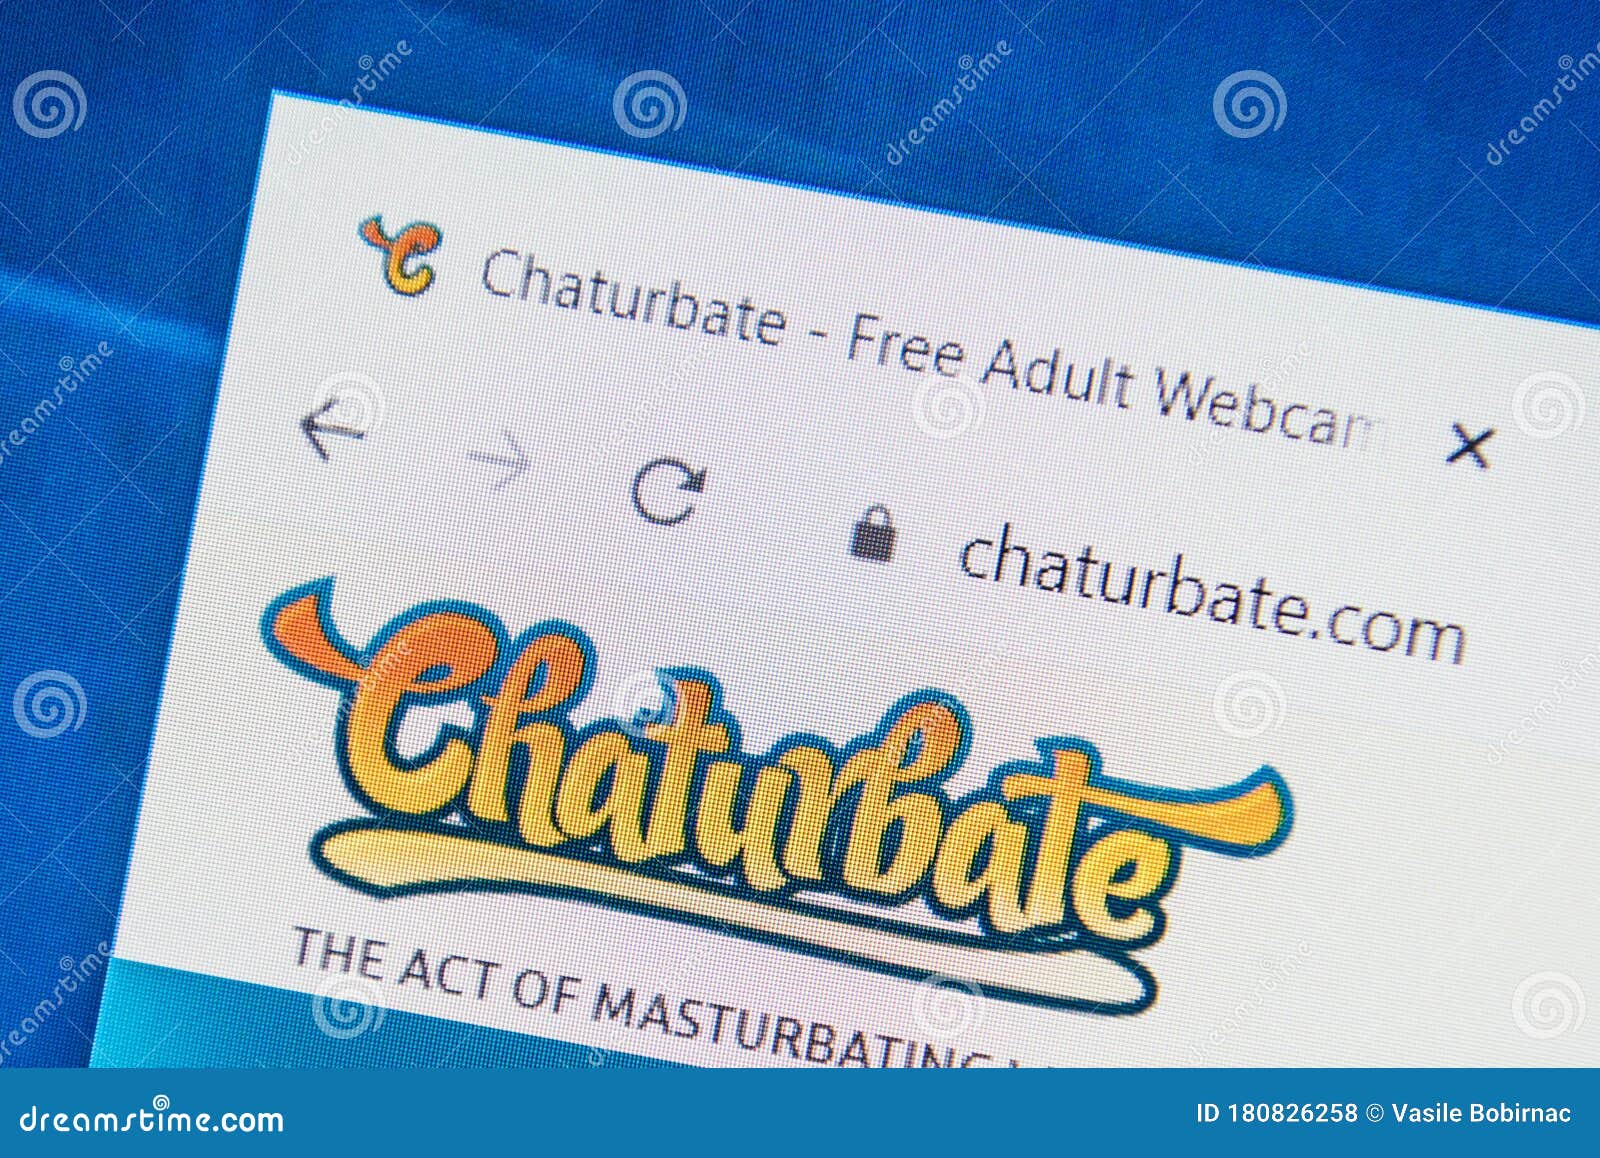 Chaturbate.com Web Site. Selective Focus. Editorial Stock Photo - Image ...